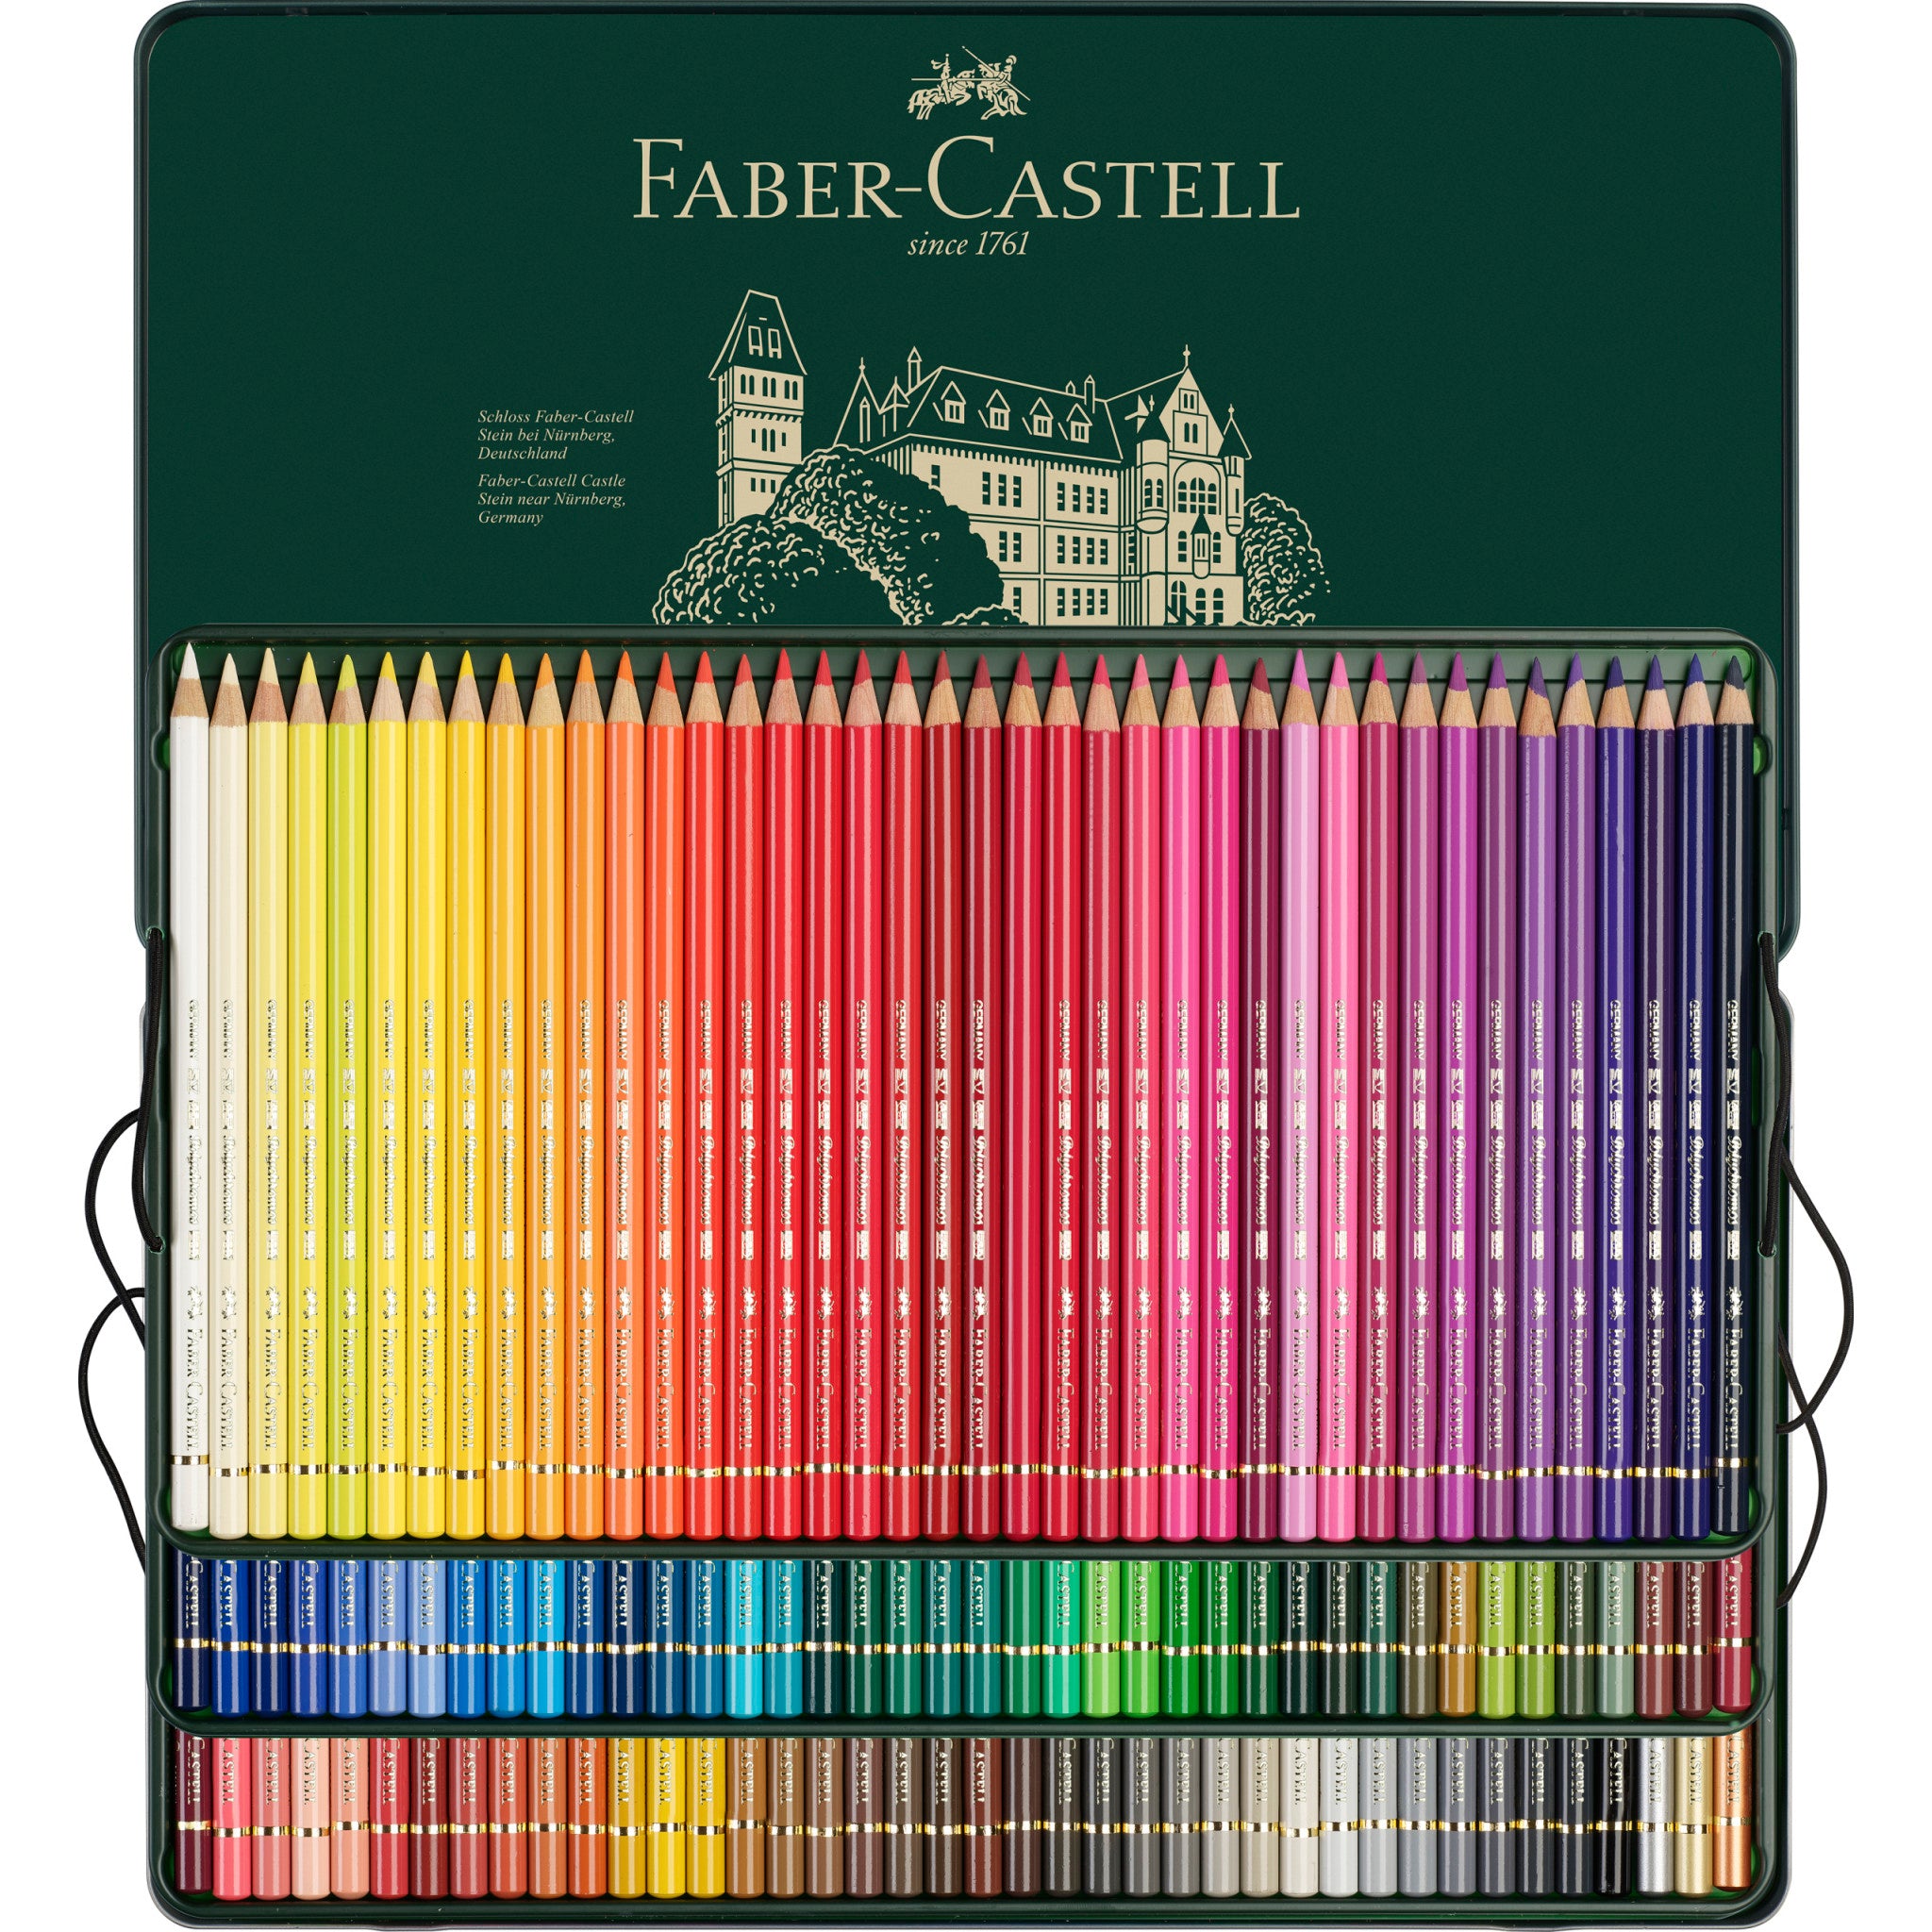  Faber Castell Polychromos Colored Pencils, 120